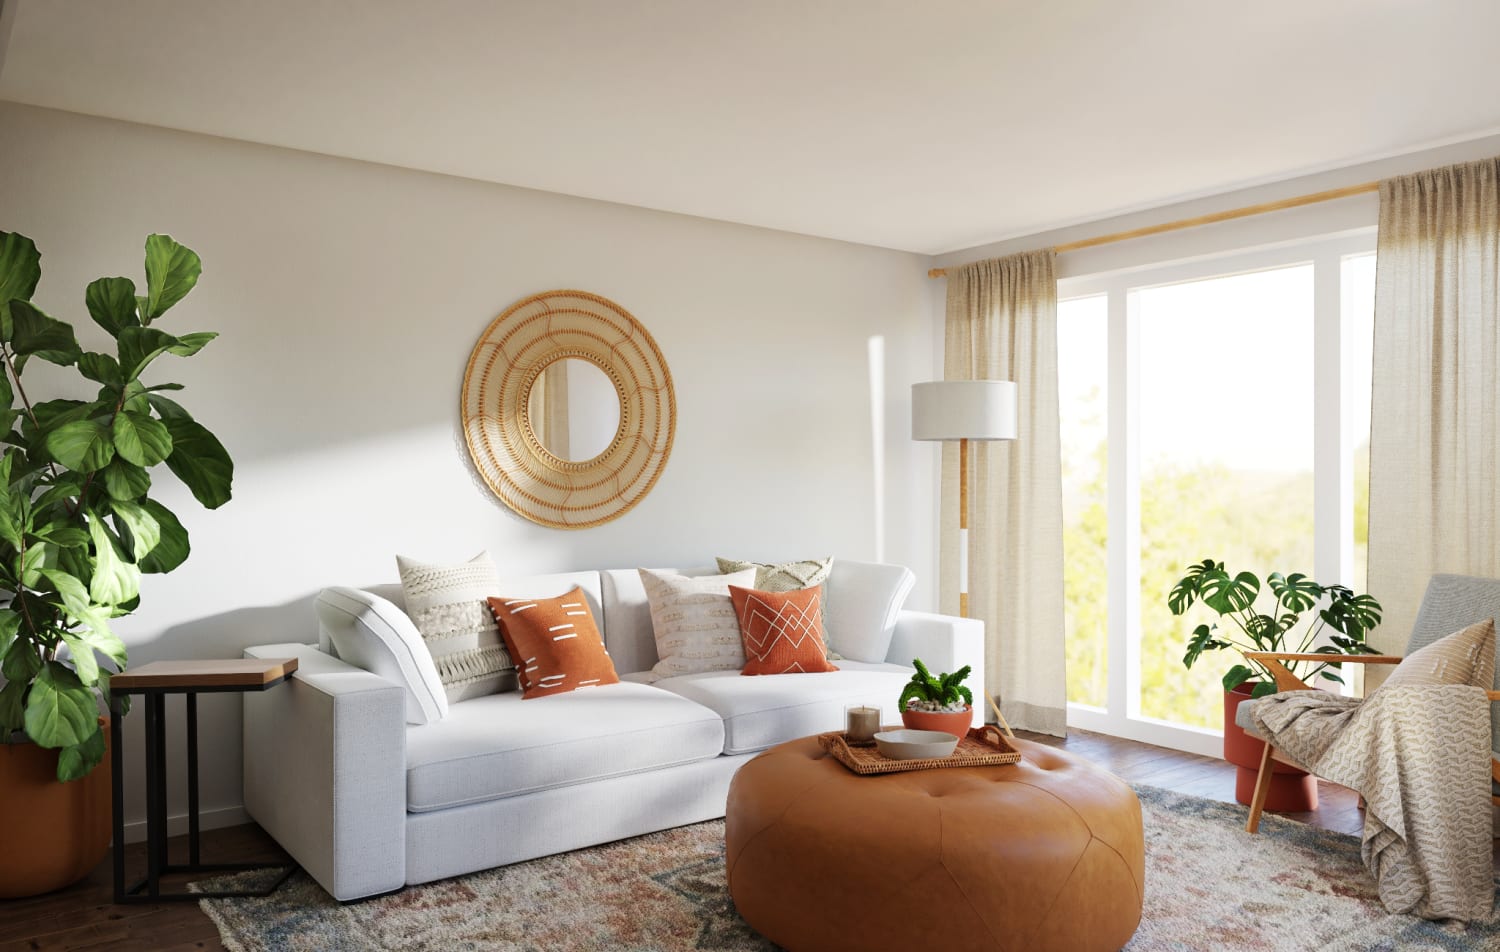 10 Modern Living Room Interior Design & Decor Ideas You Can Steal ...